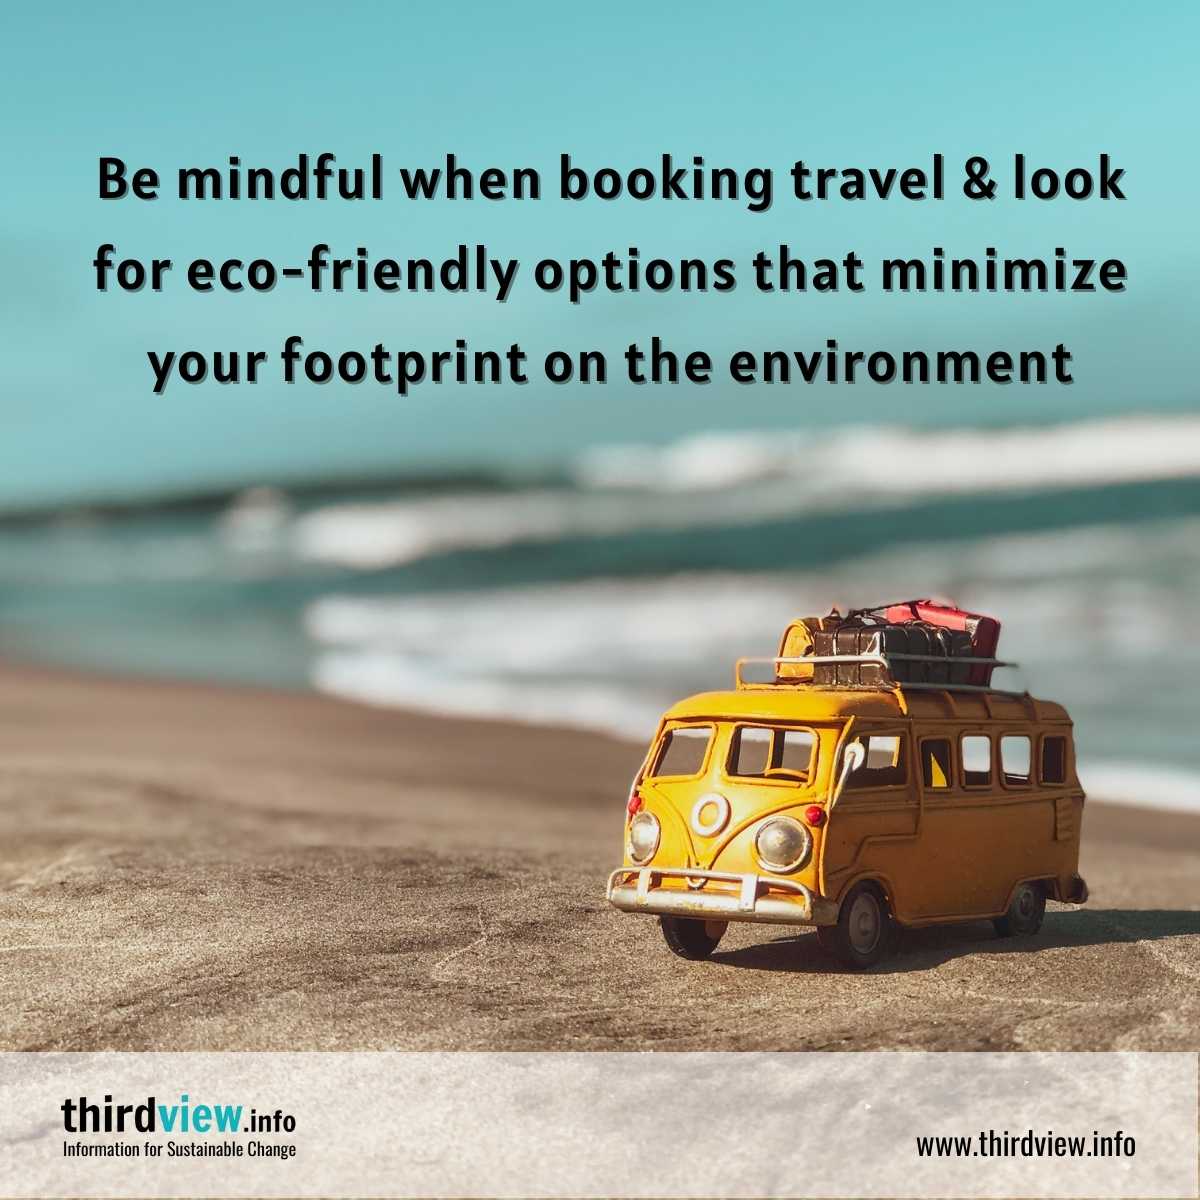 Eco-friendly travel options